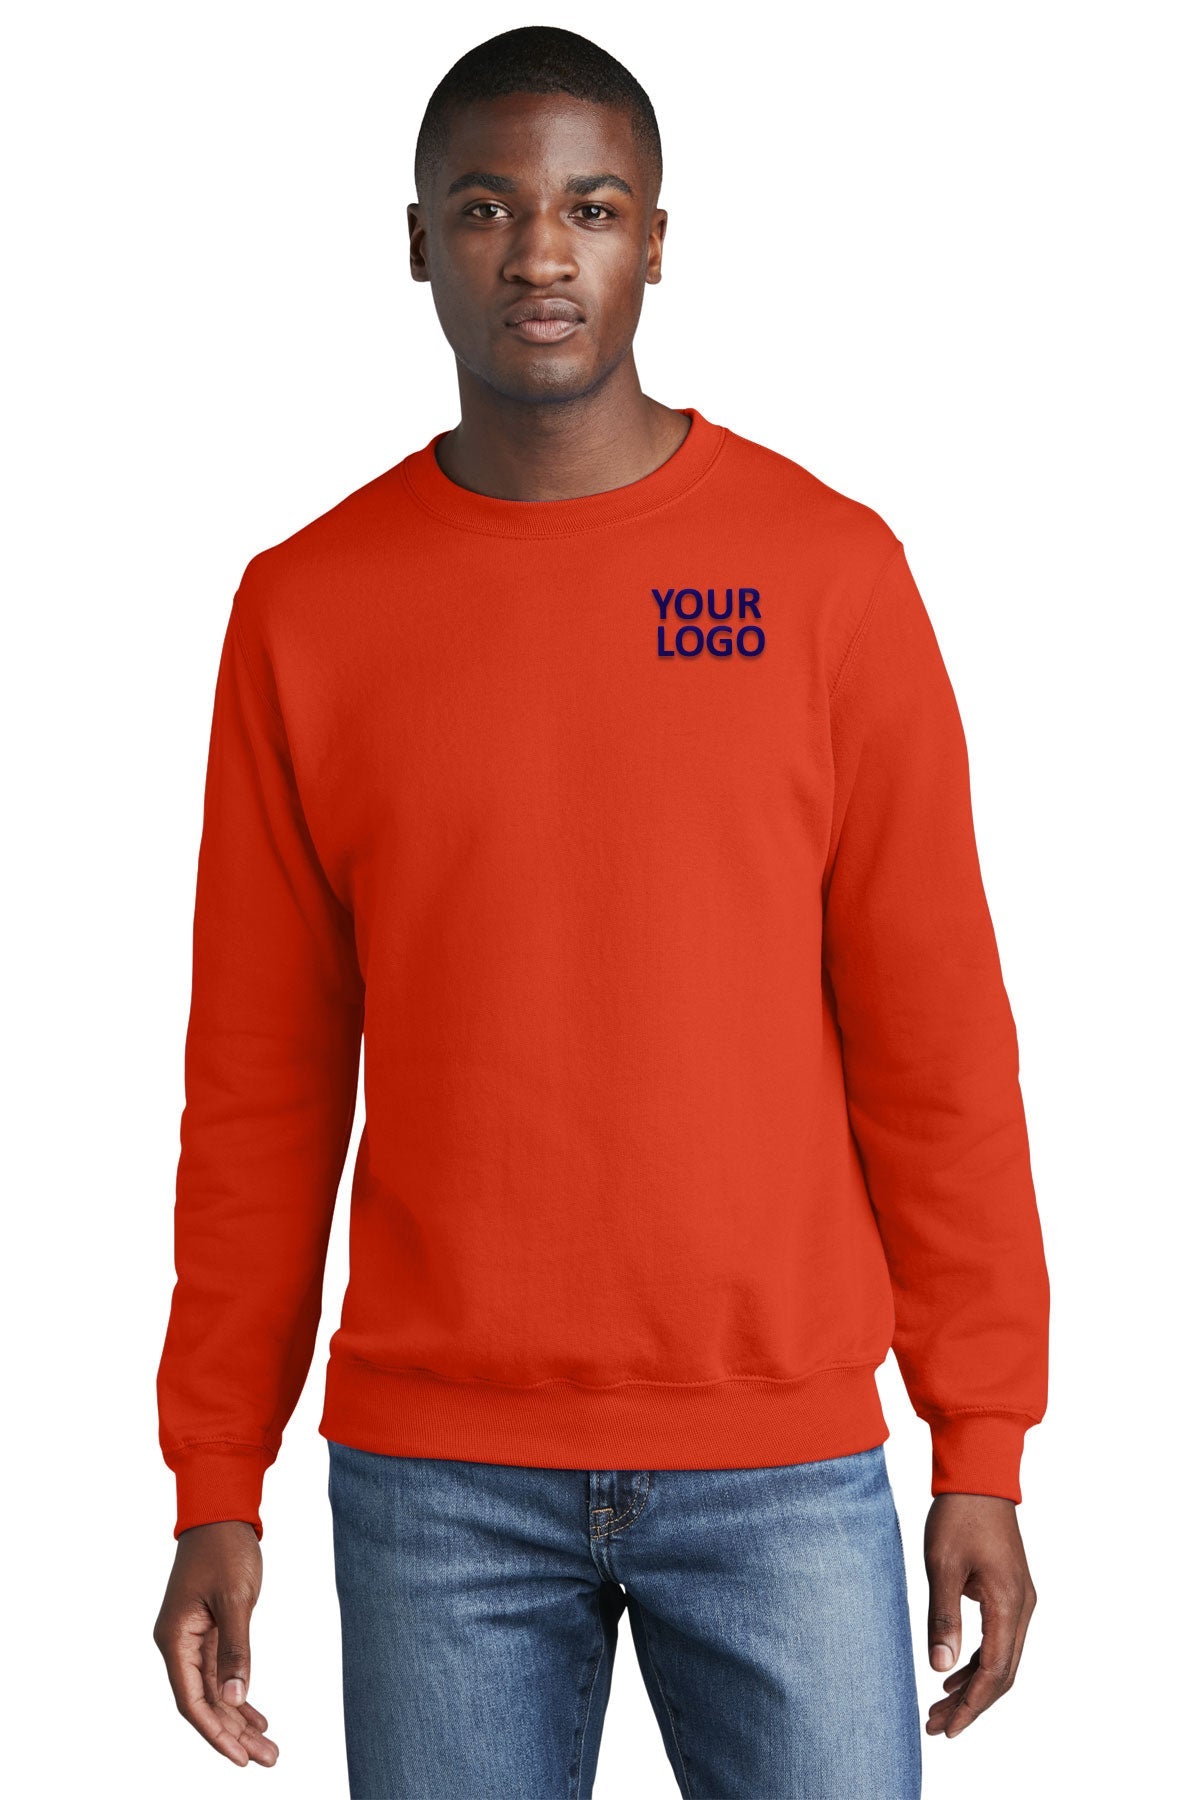 port & company orange pc78 company sweatshirts embroidered